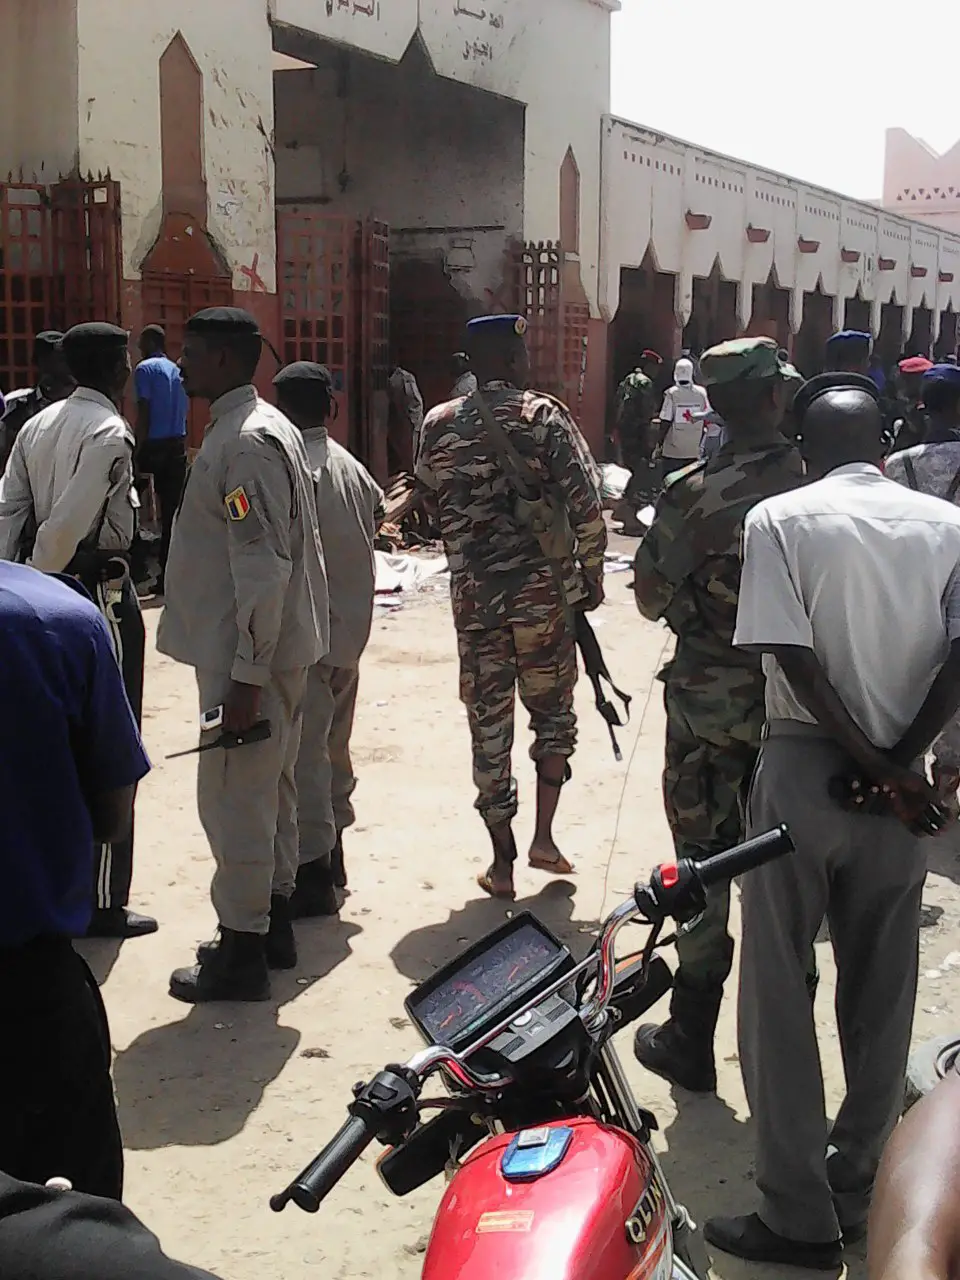 La CEEAC condamne "avec la plus grande fermeté" l'attentat de N'Djamena. Alwihda Info/D.W.W.